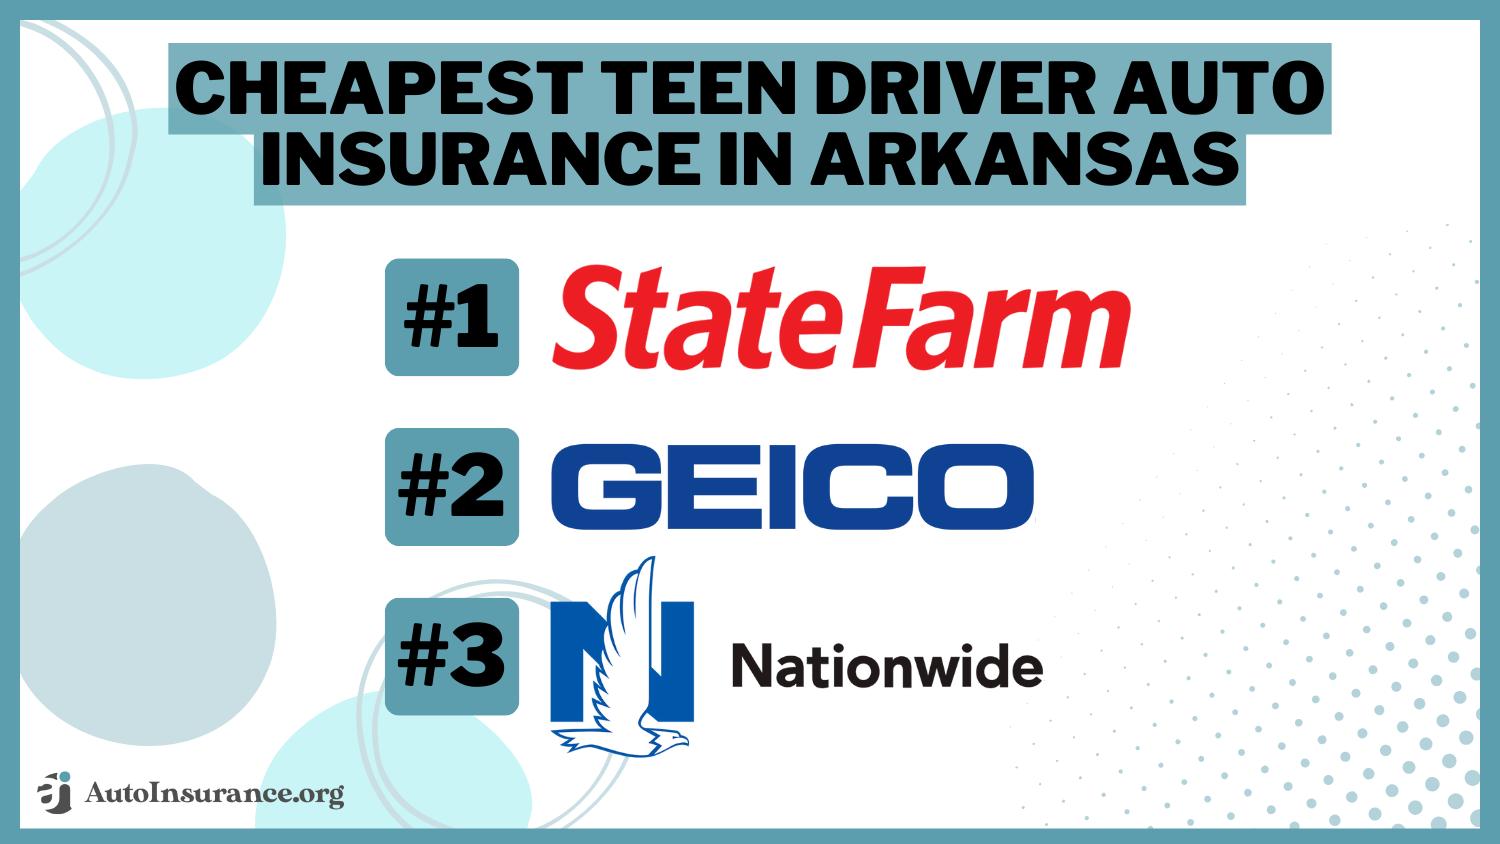 Cheapest Teen Driver Auto Insurance in Arkansas: State Farm, Geico, Nationwide